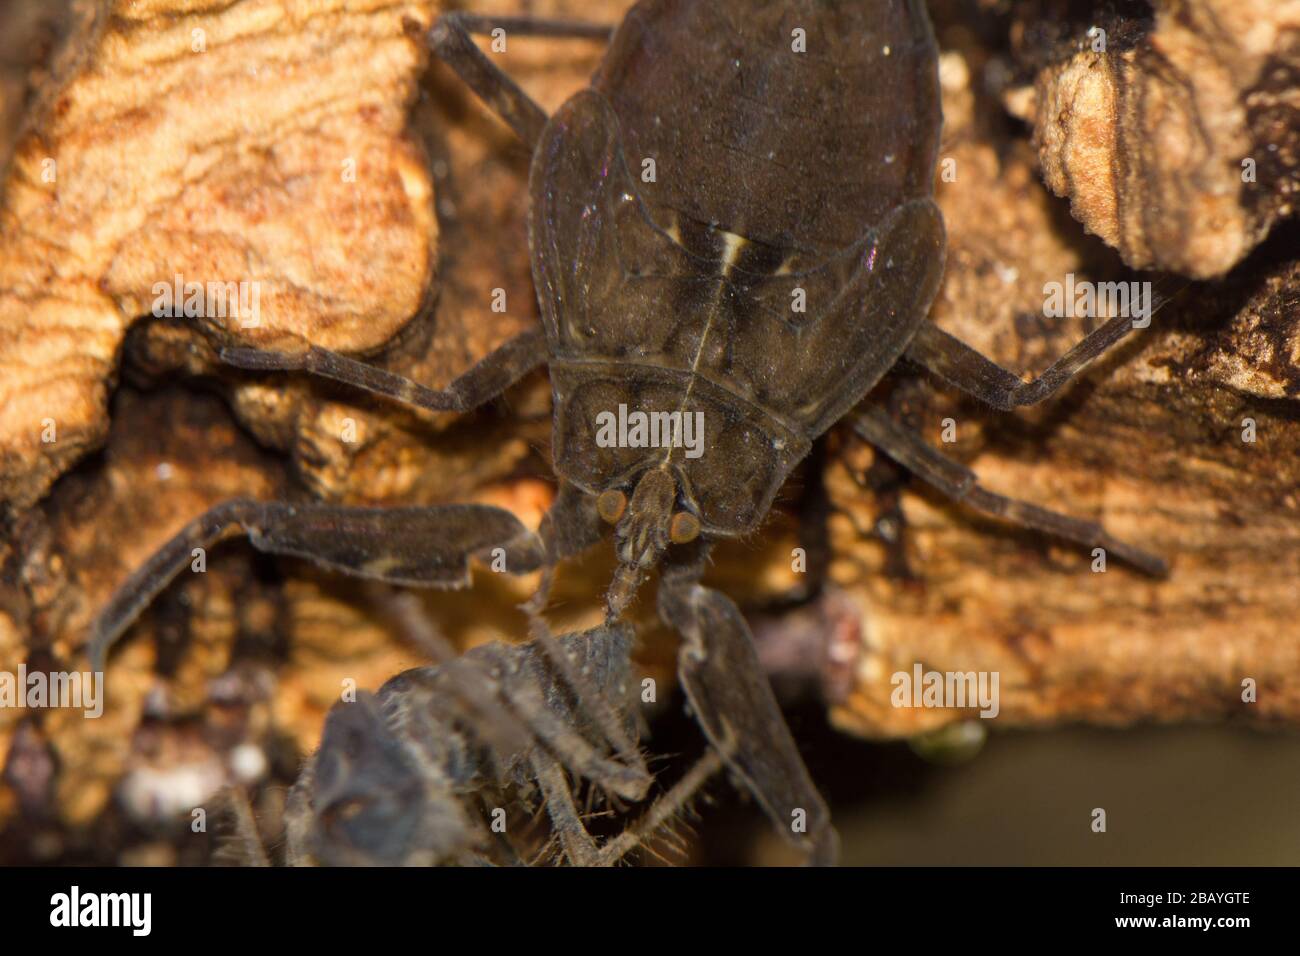 Water scorpion with prey (Nepa cinerea) Stock Photo